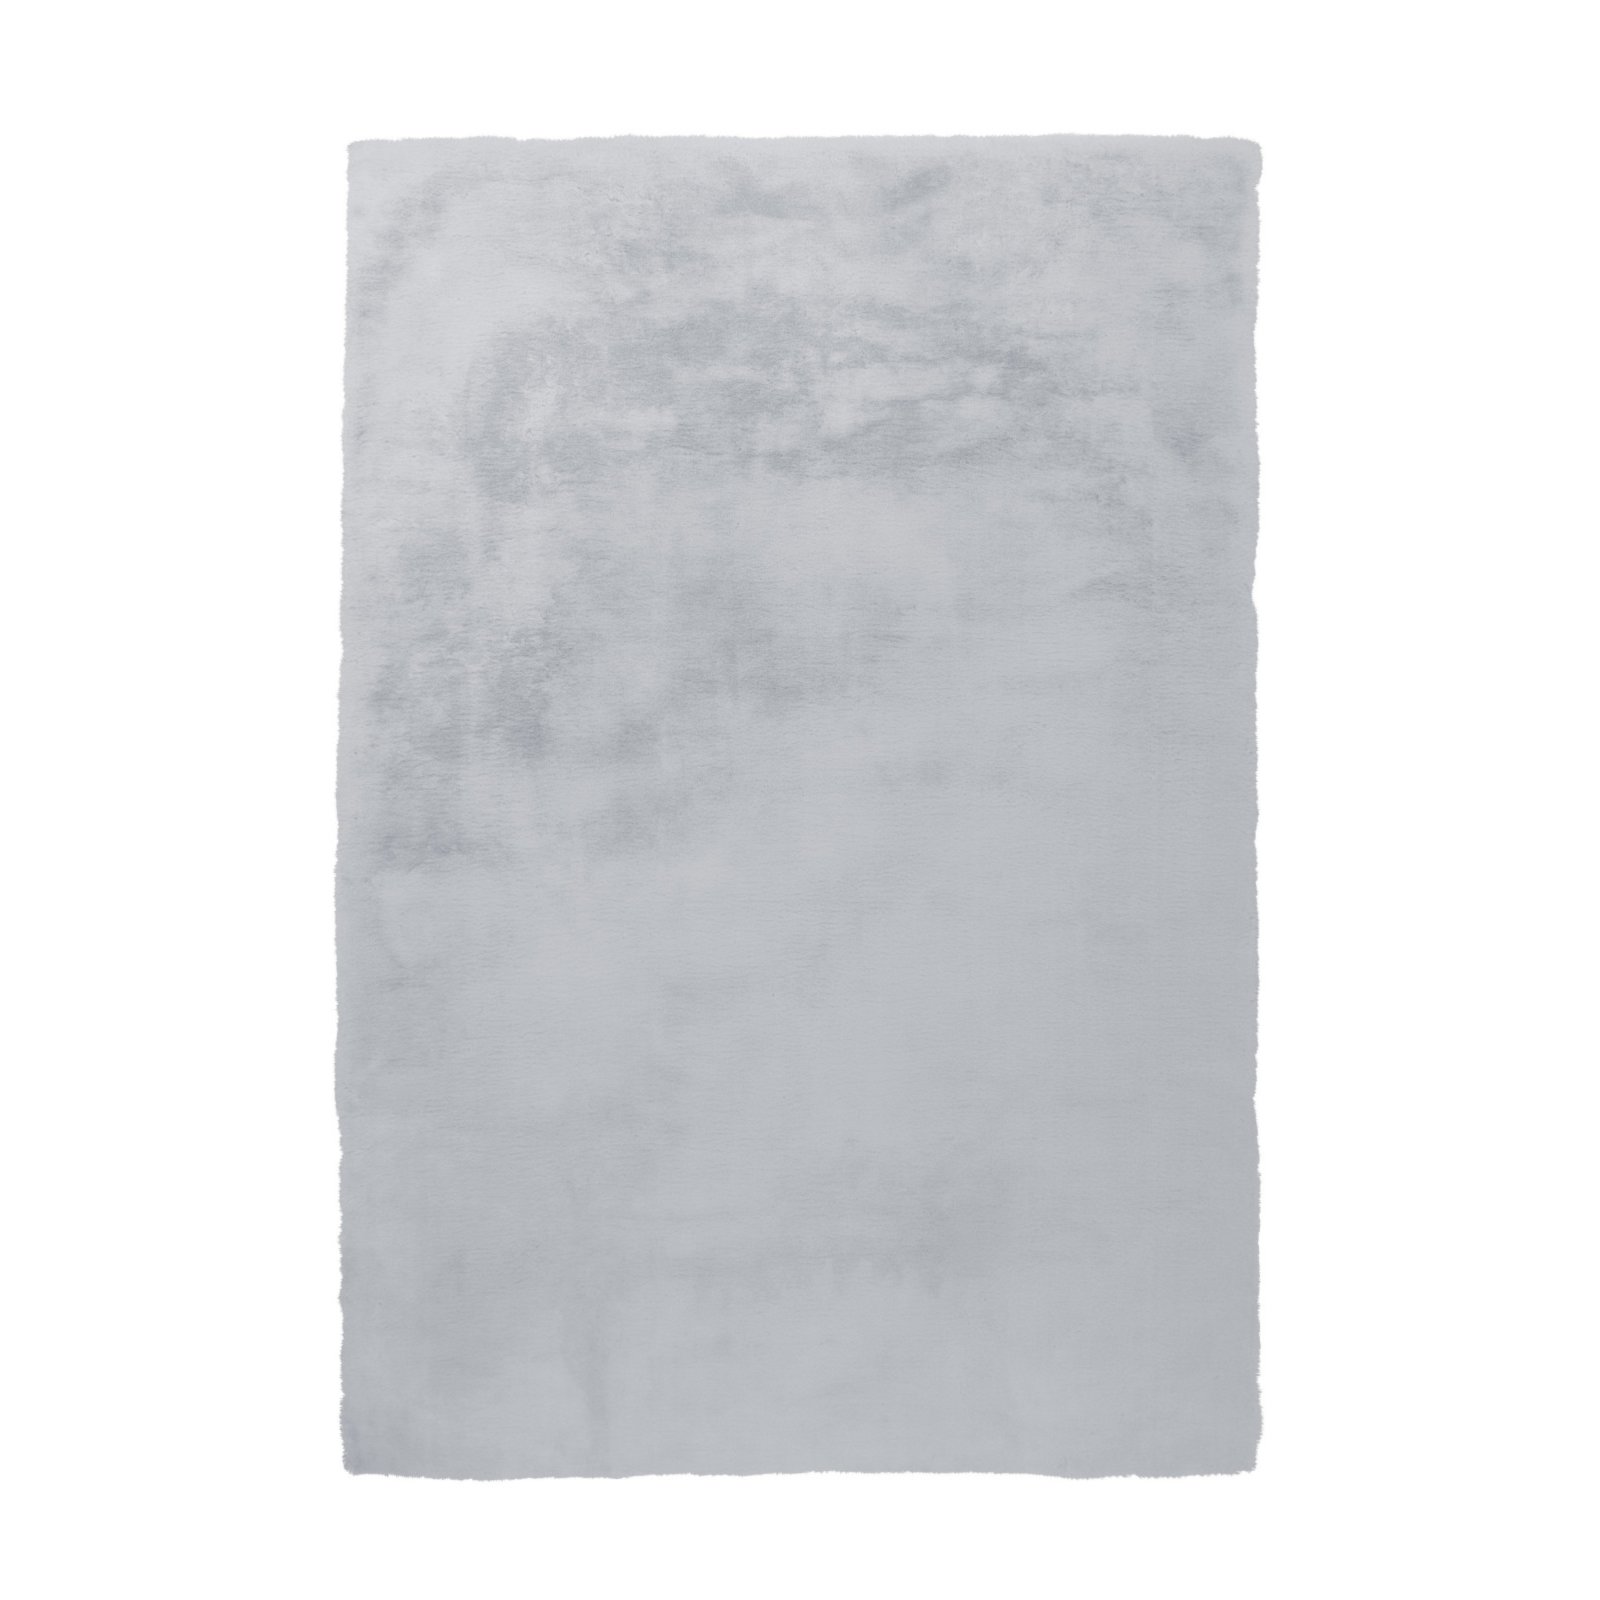 | ROLLER - - Kunstfell-Teppich Online kaufen bei Kaninchenfell-Haptik 160x230 - grau-blau cm